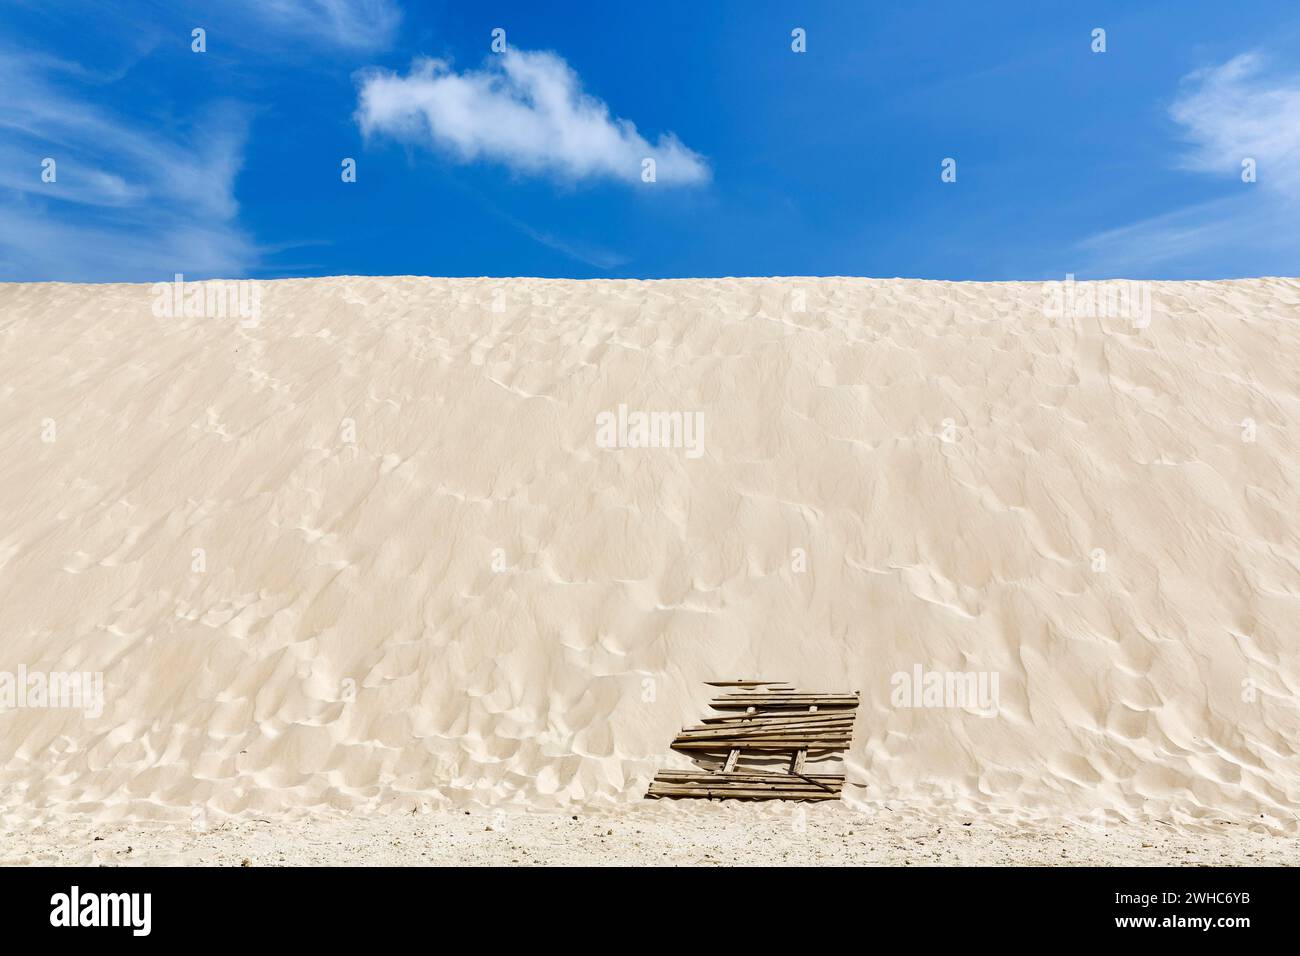 Empty dune, shifting dune, white fine sand, spring clouds, minimalist landscape, symbolic image, coastline, Valdevaqueros, Tarifa, Spain Stock Photo